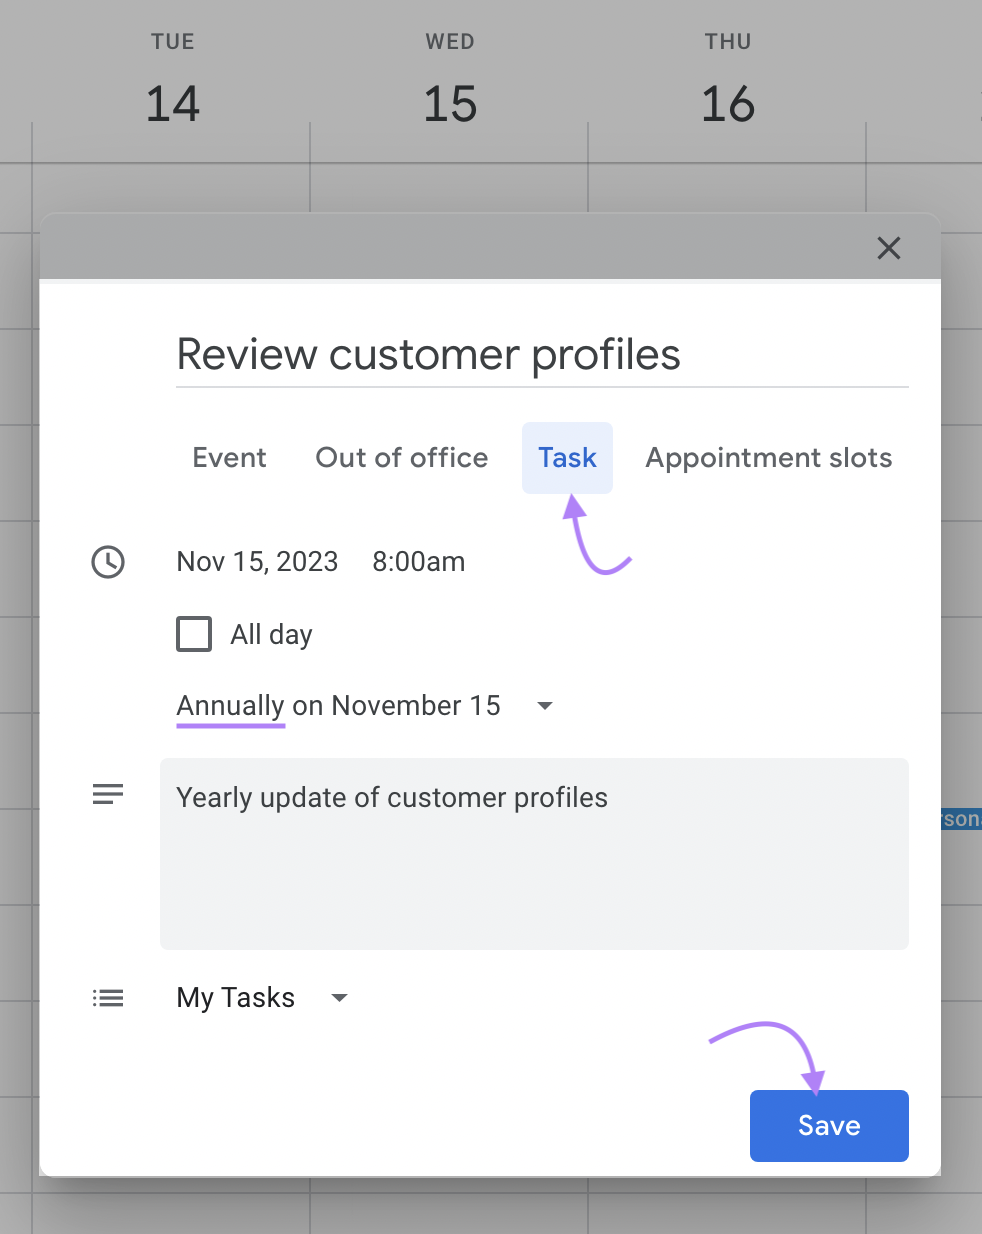 "Review customer profiles" reminder in Google Calendar